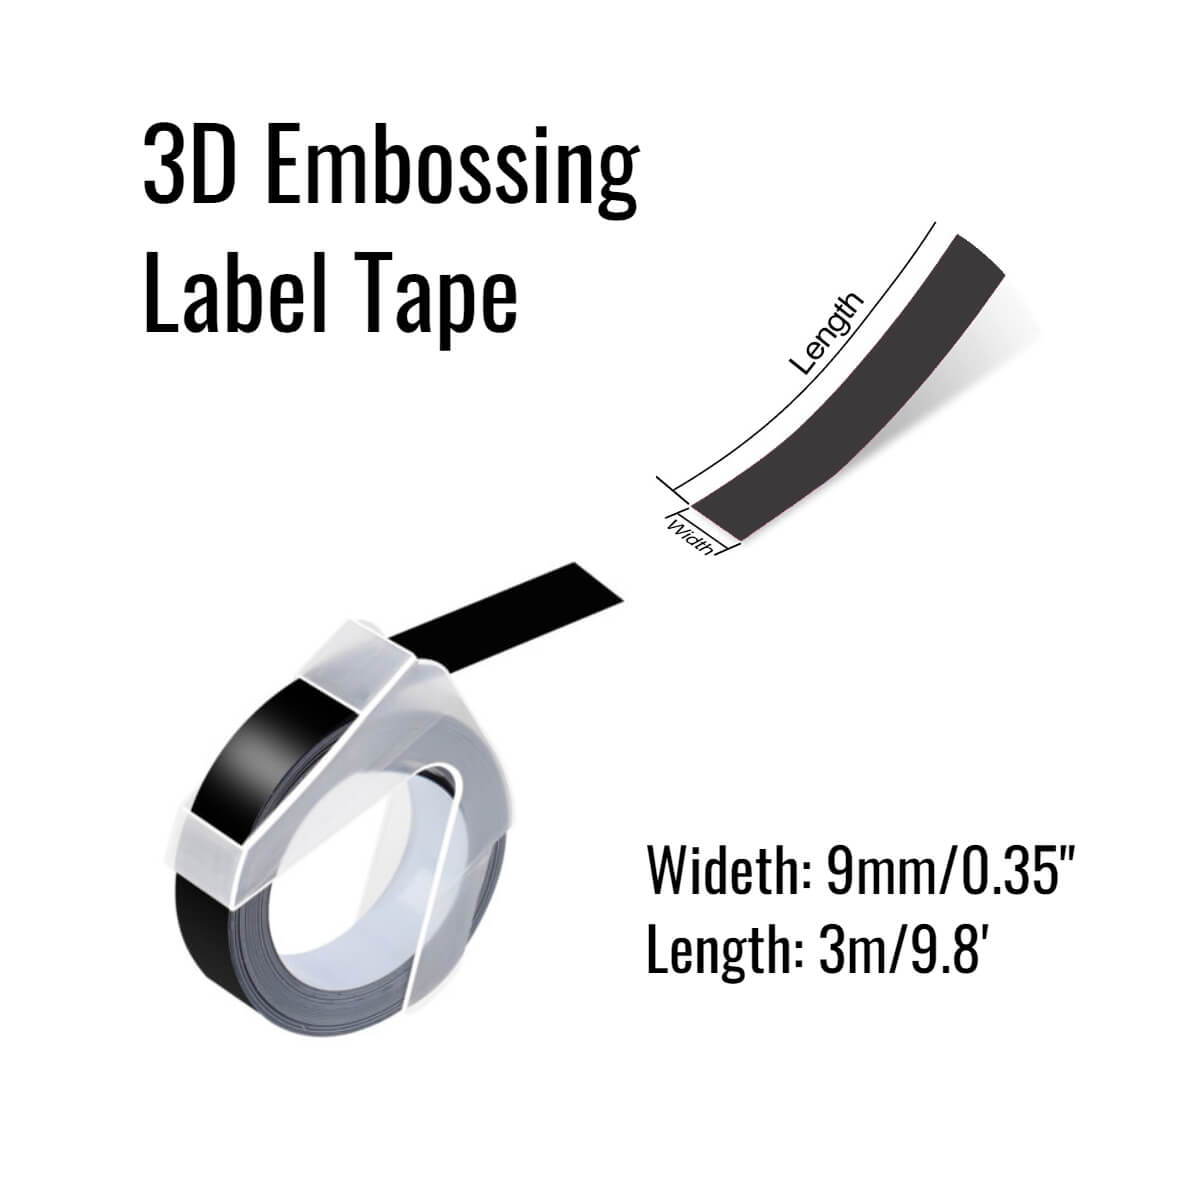 Efficient and convenient embossed label printer B90 embossed label printer and 8 ribbons – easily create professional labels